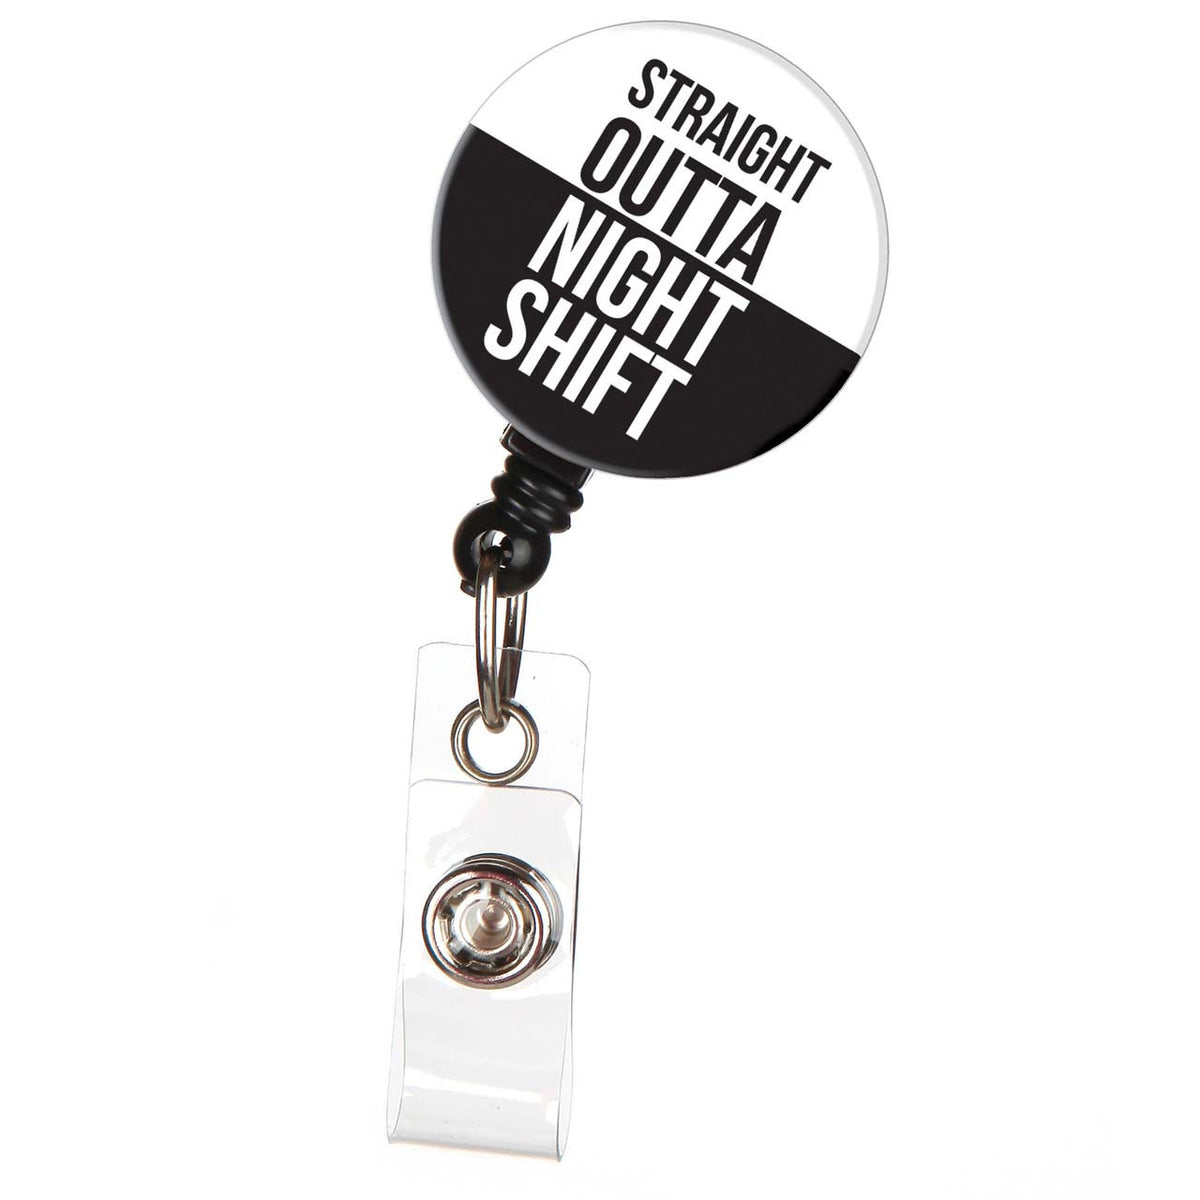 Straight Outta Night Shift Badge Reel